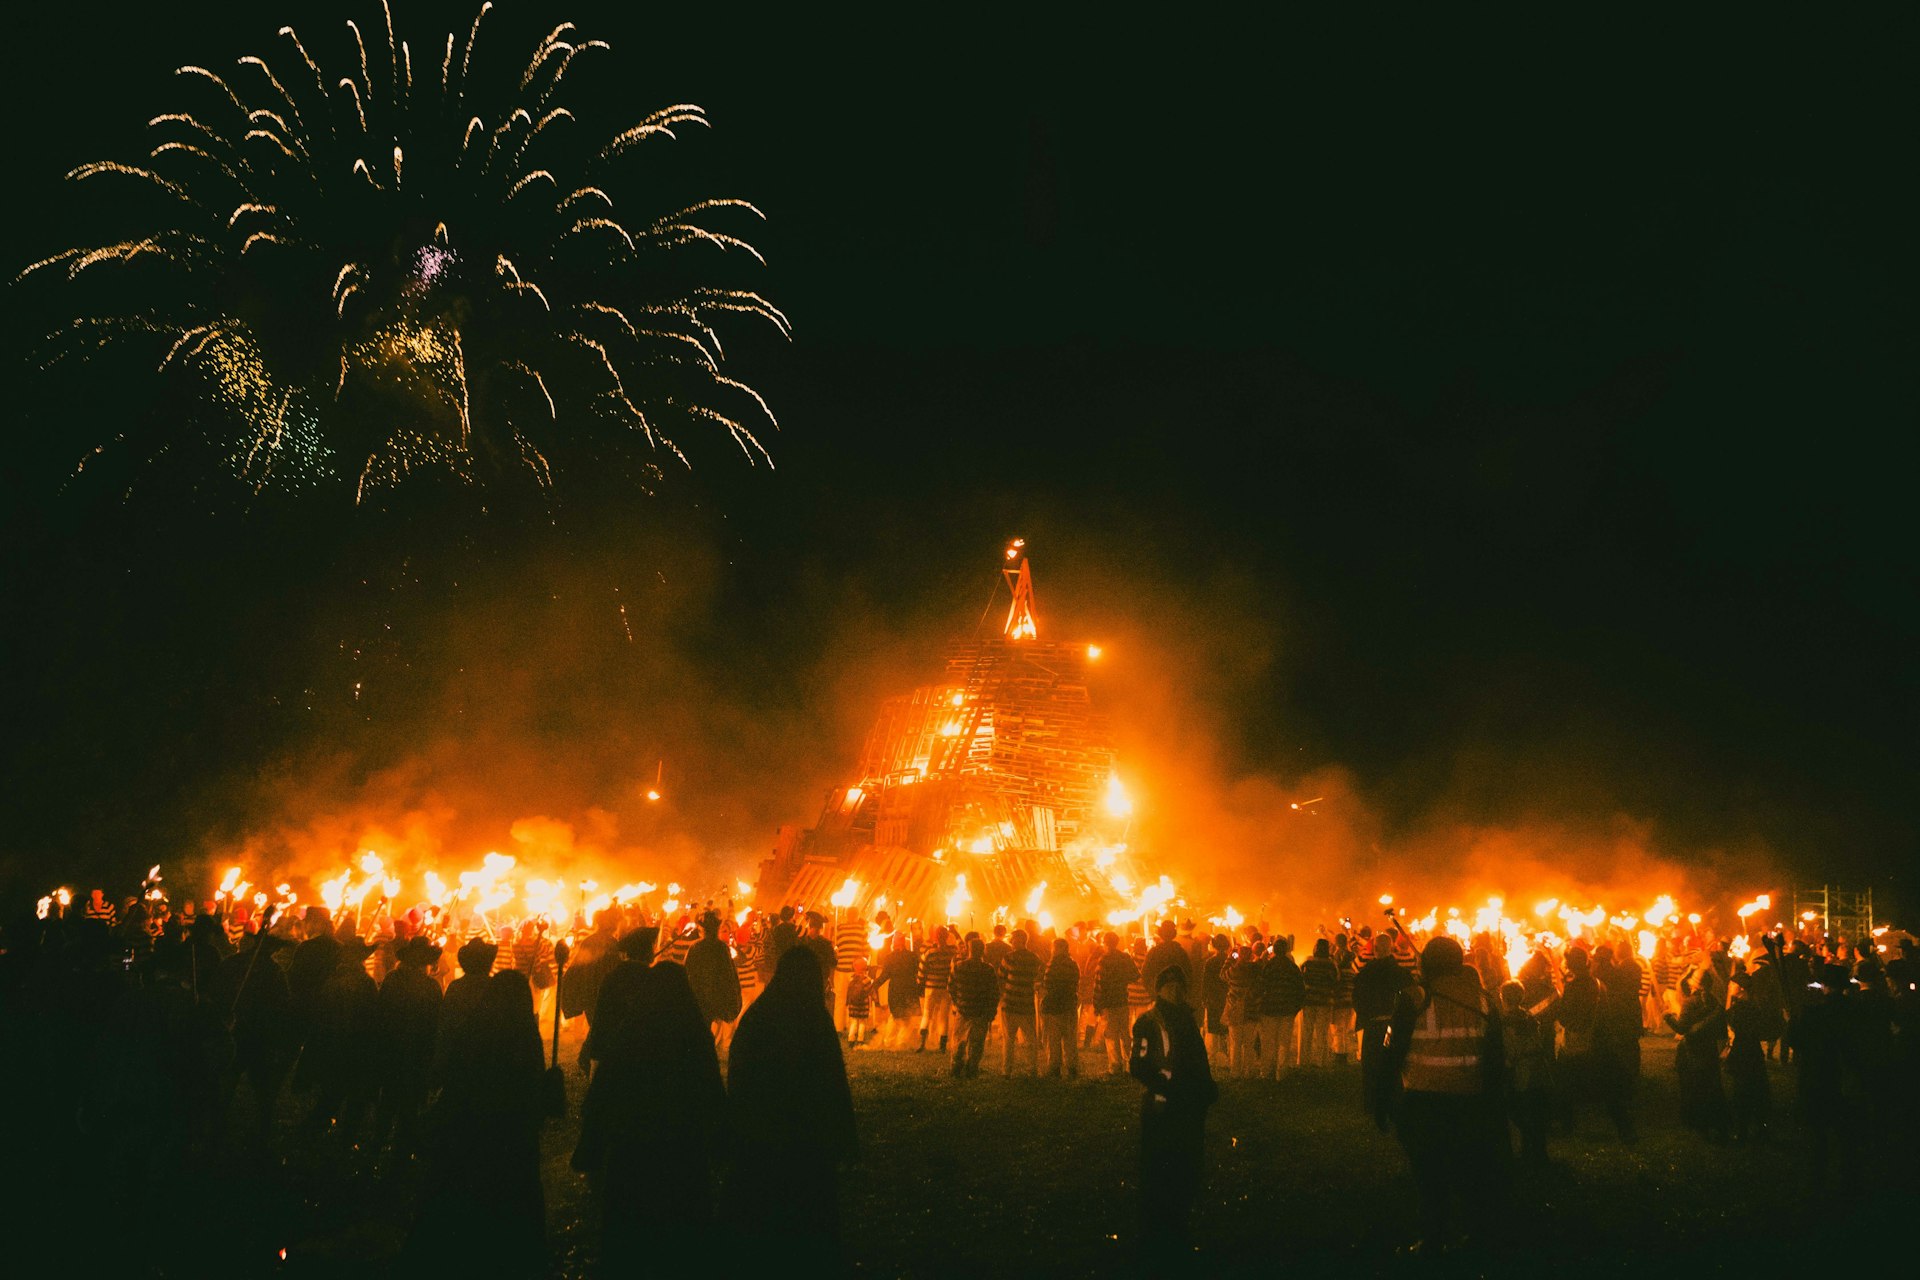 Striking photos of an English town on Bonfire night